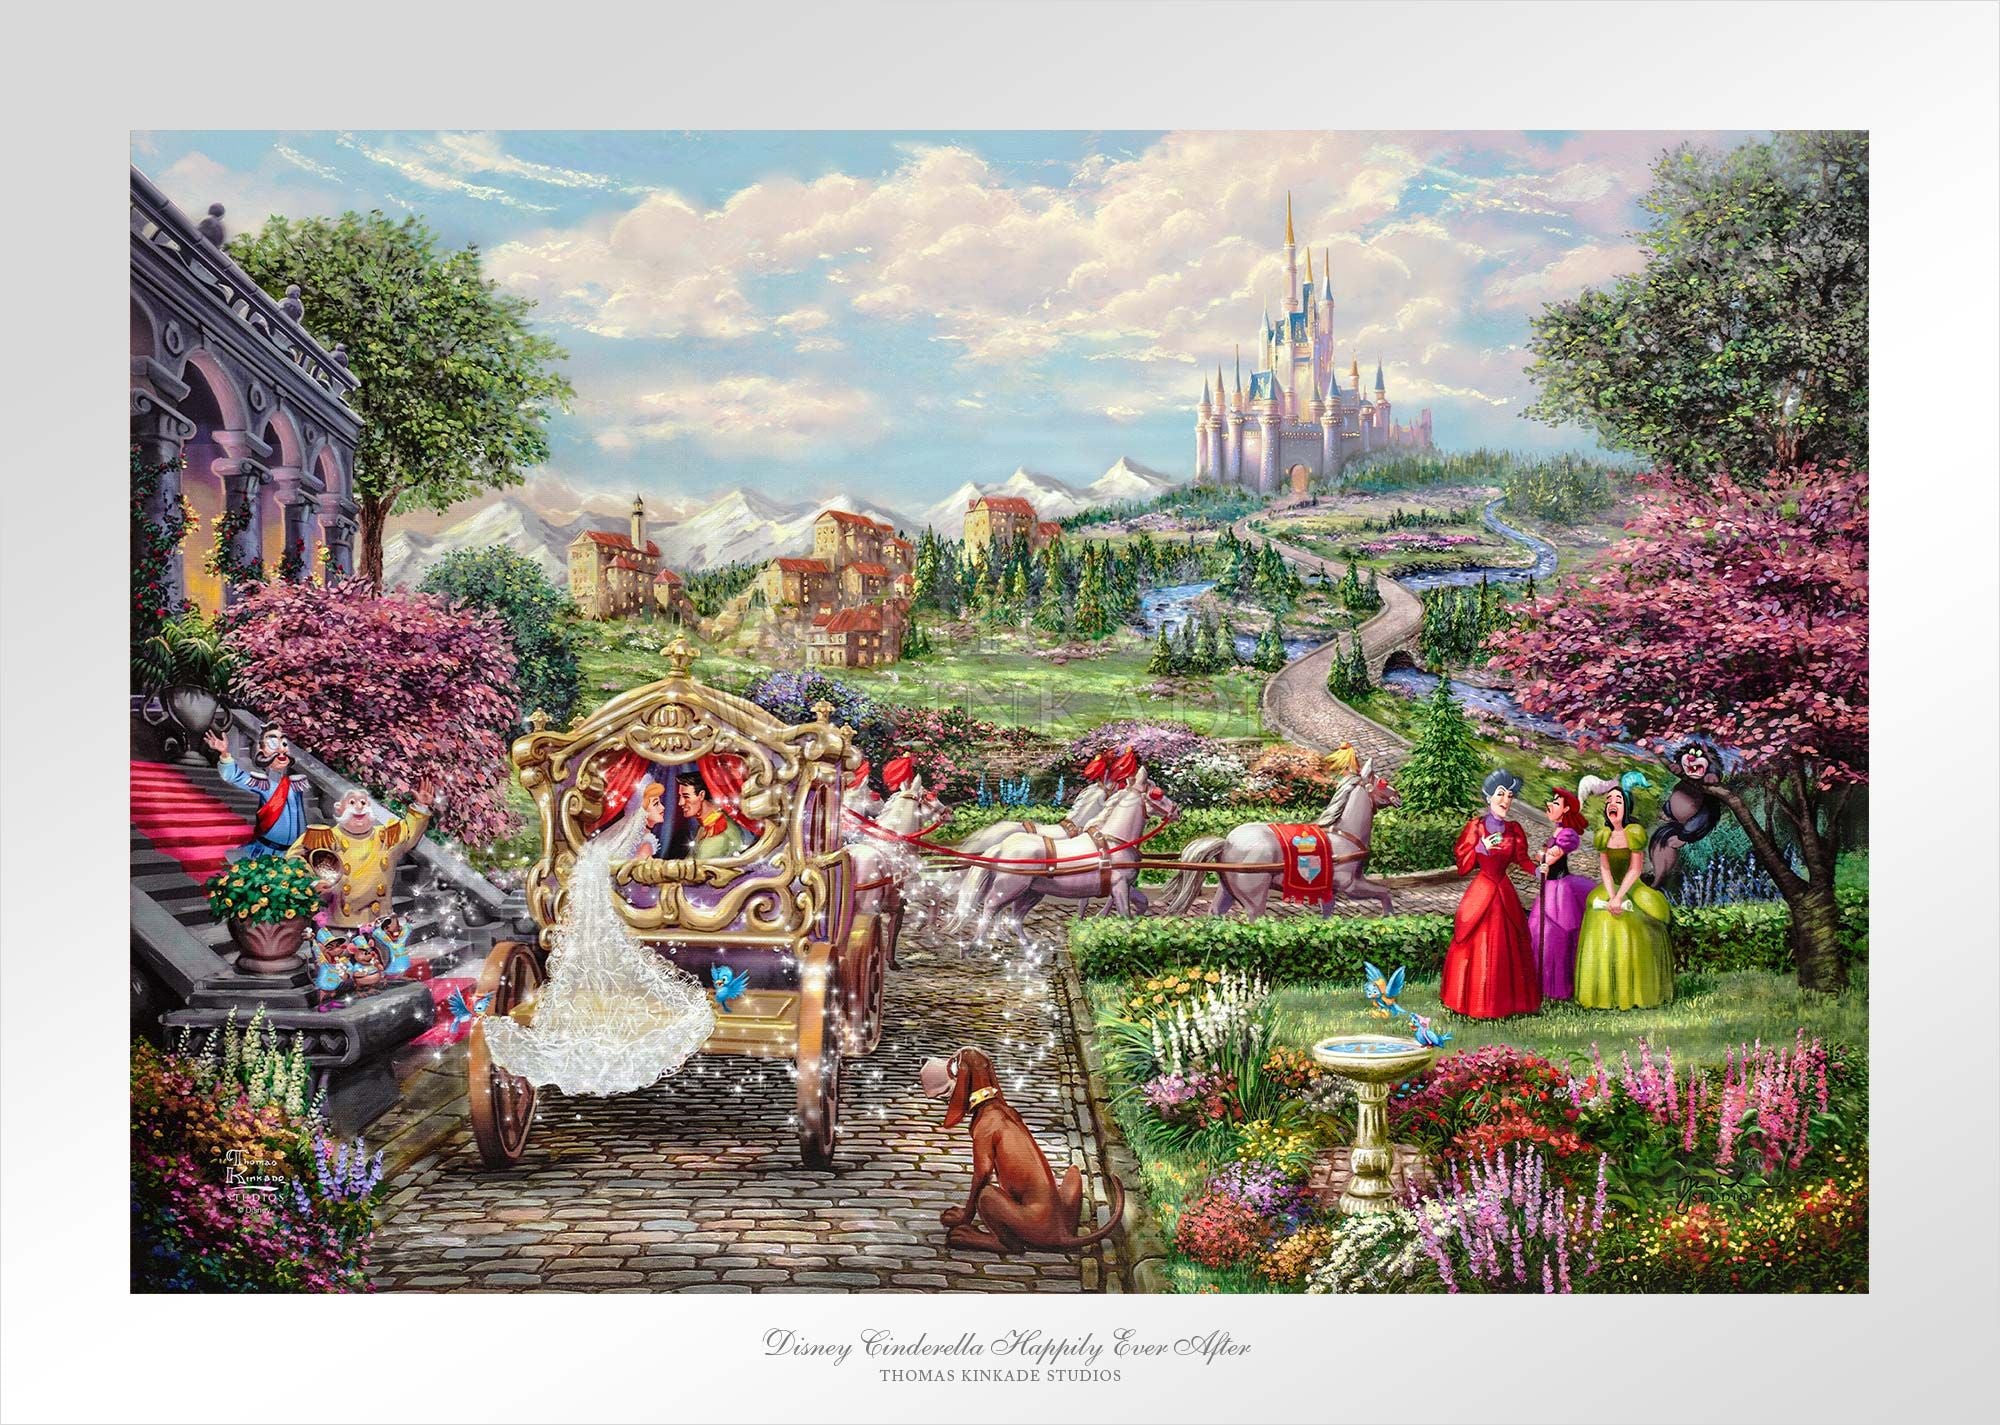 The Kingdom celebrates Cinderella and Prince Charming's true love unit. - Unframed